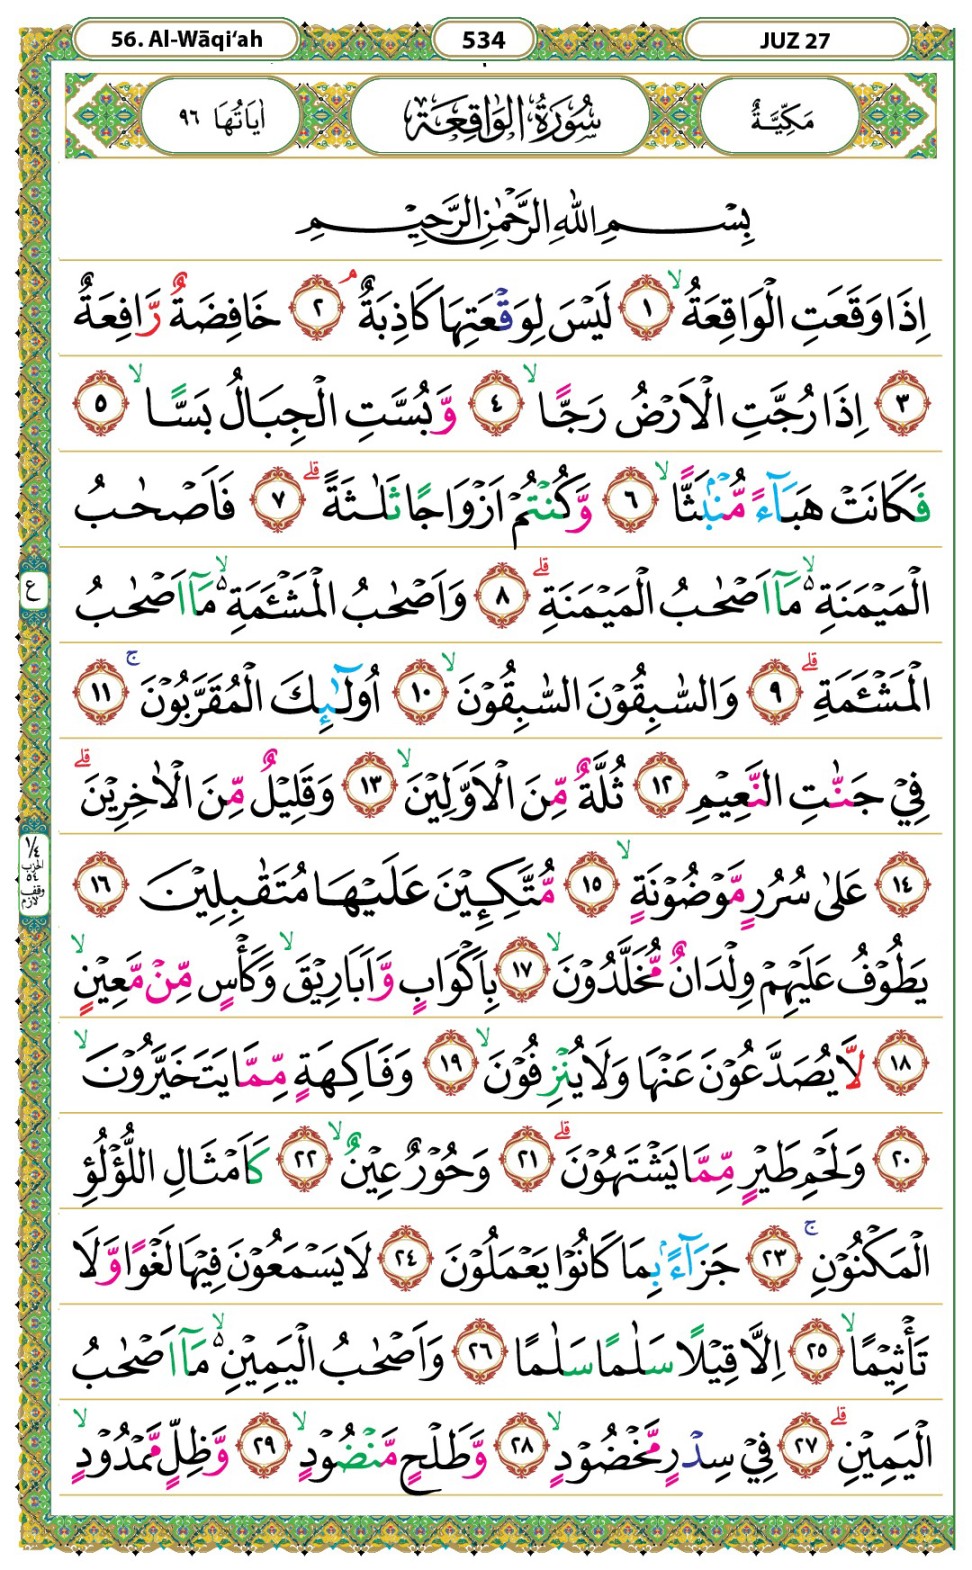 Surat Al Waqiah Full: Teks Arab, Latin, Arti, Kandungan Dan Manfaatnya